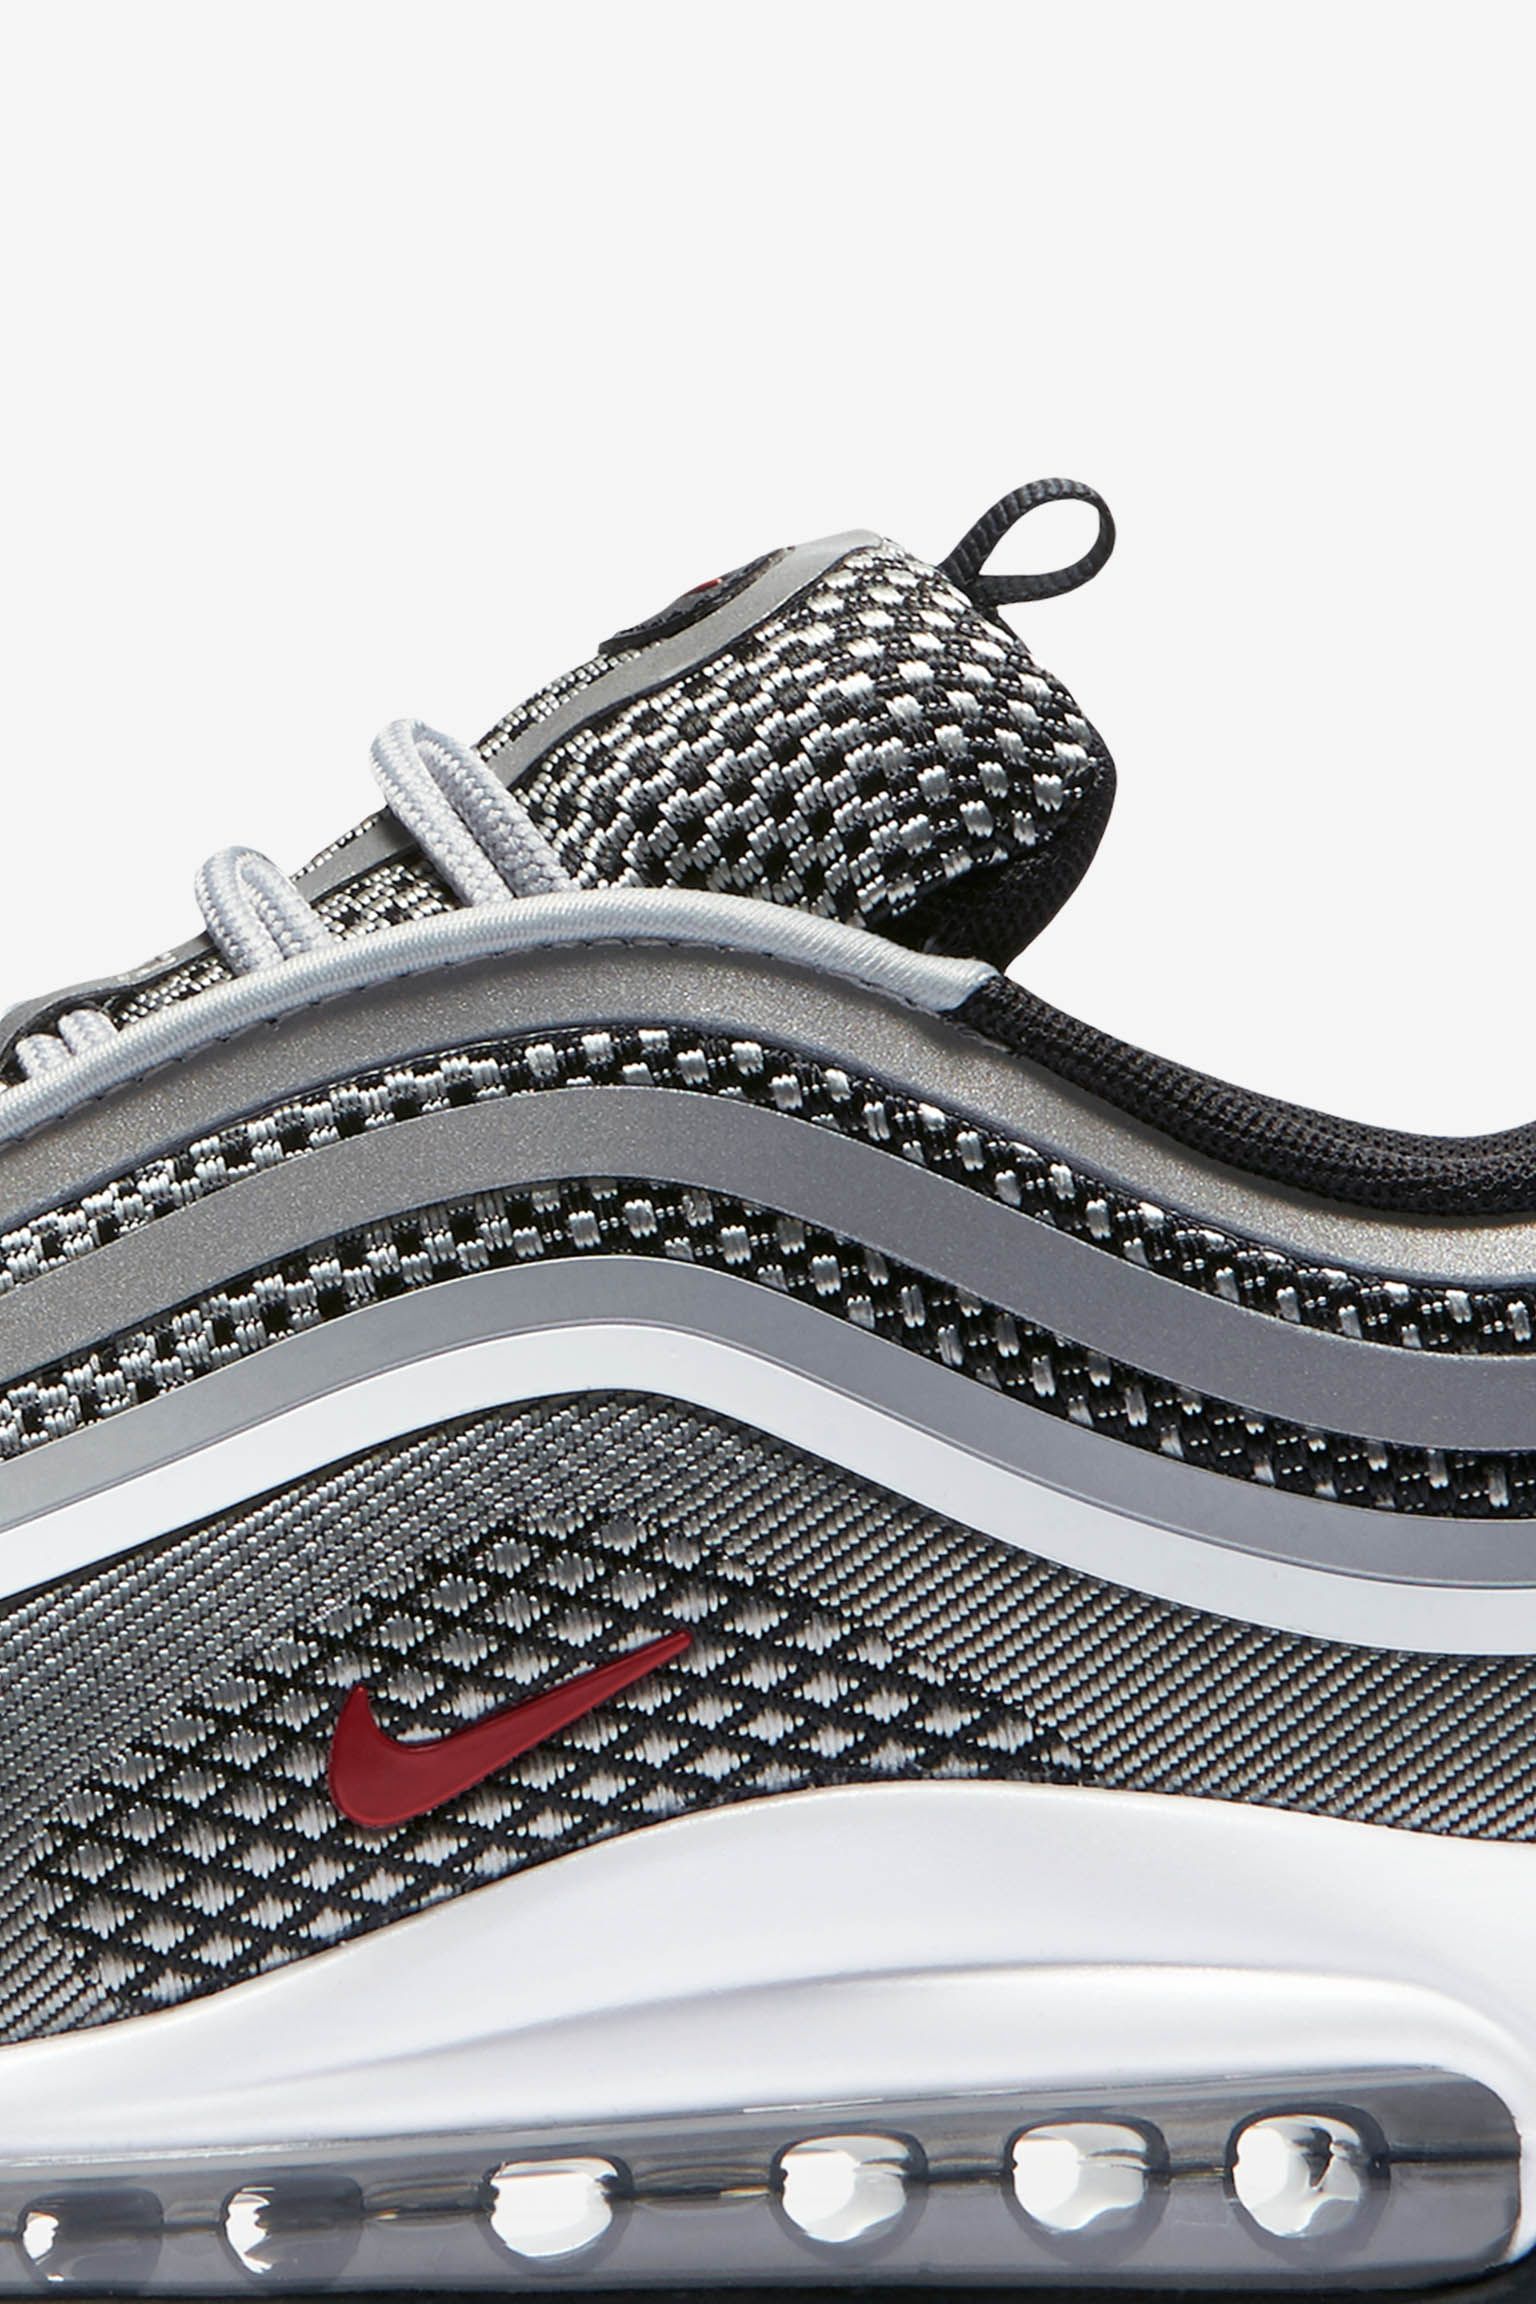 auteur waterval ademen Women's Nike Air Max 97 Ultra '17 'Metallic Silver' Release Date. Nike SNKRS